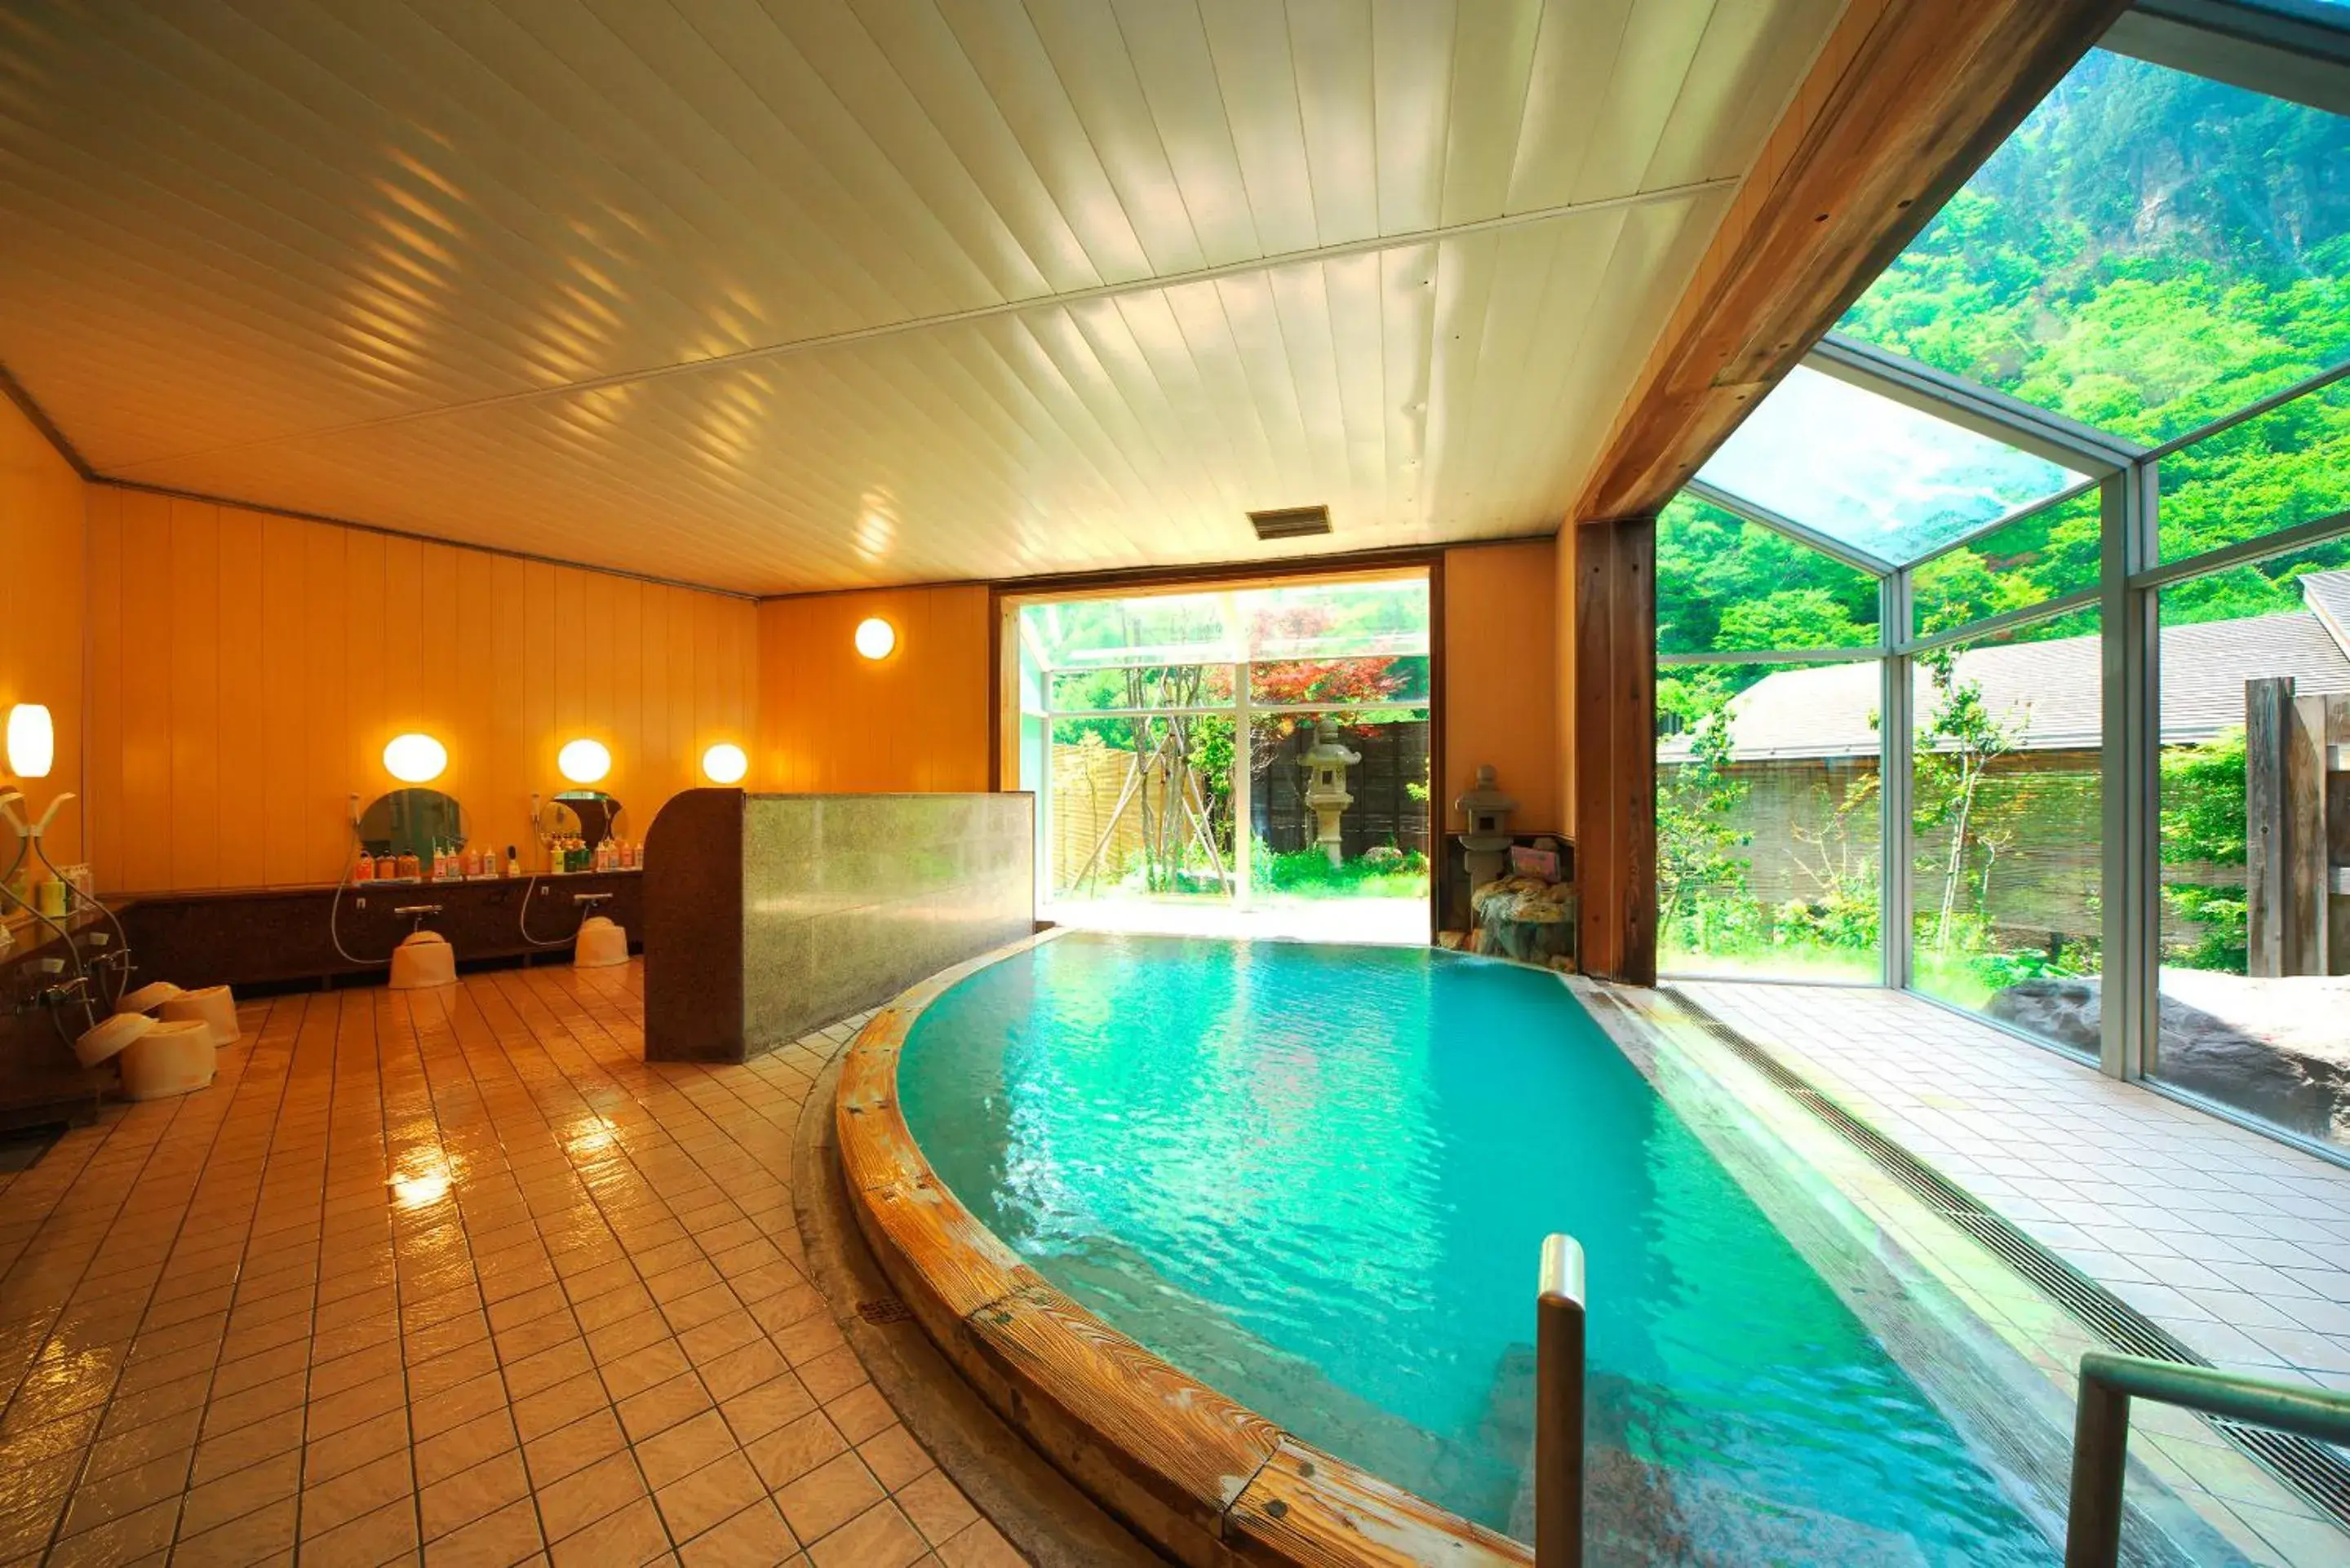 Public Bath, Swimming Pool in Hotel Hotaka